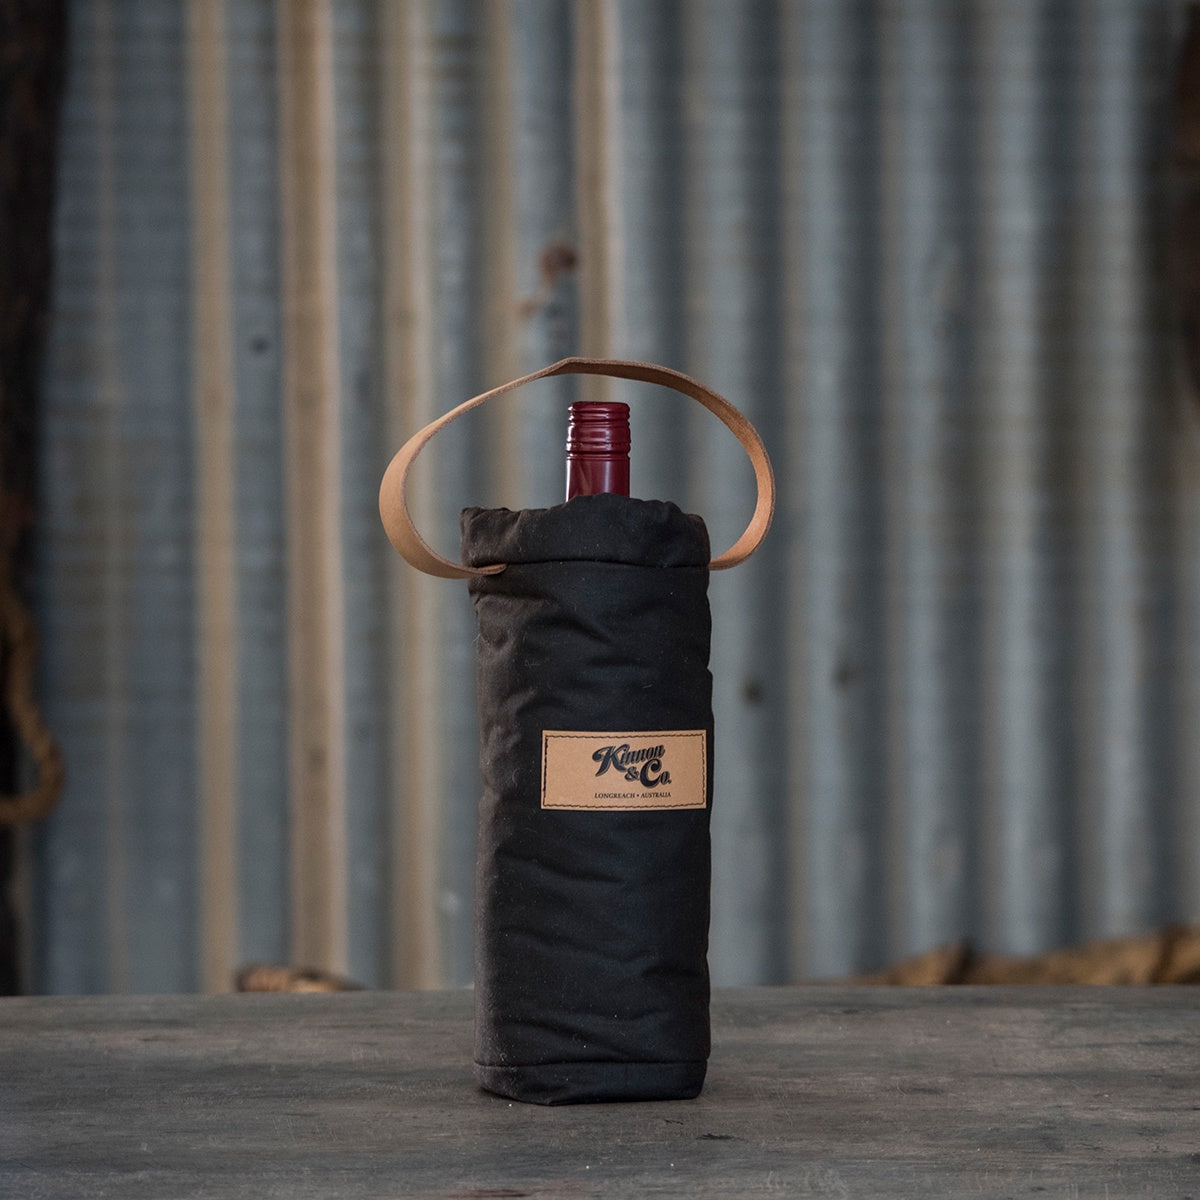 Kinnon and Co branded Oilskin Woolly Wine Cooler - Single Bottle. Leather handle